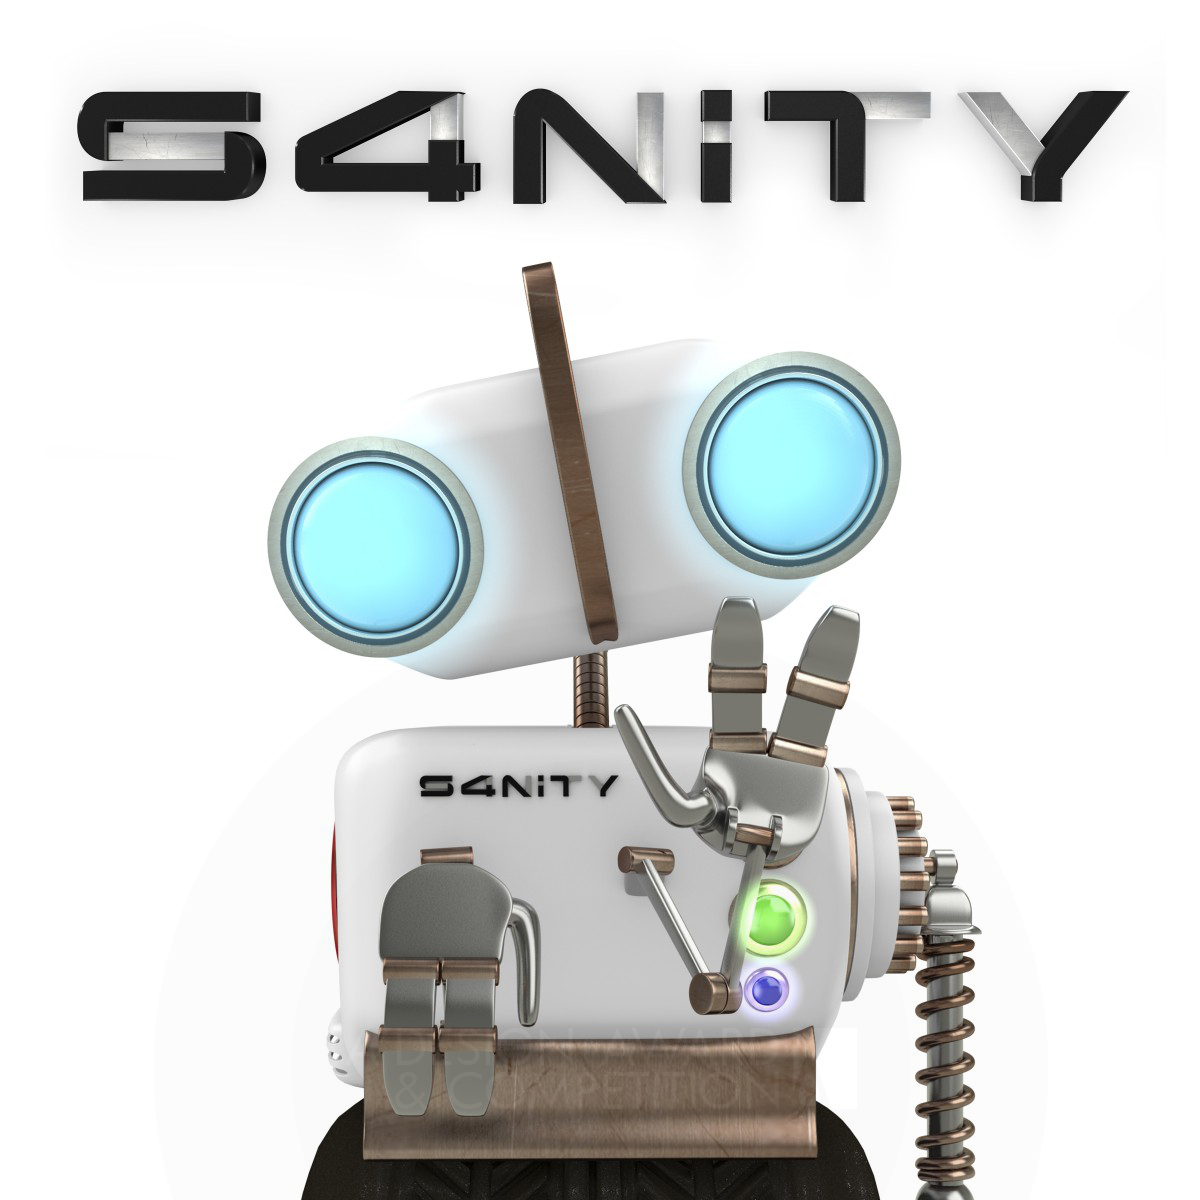 S4nity S4 ident Brand Identity  by Creativitea Design Studio